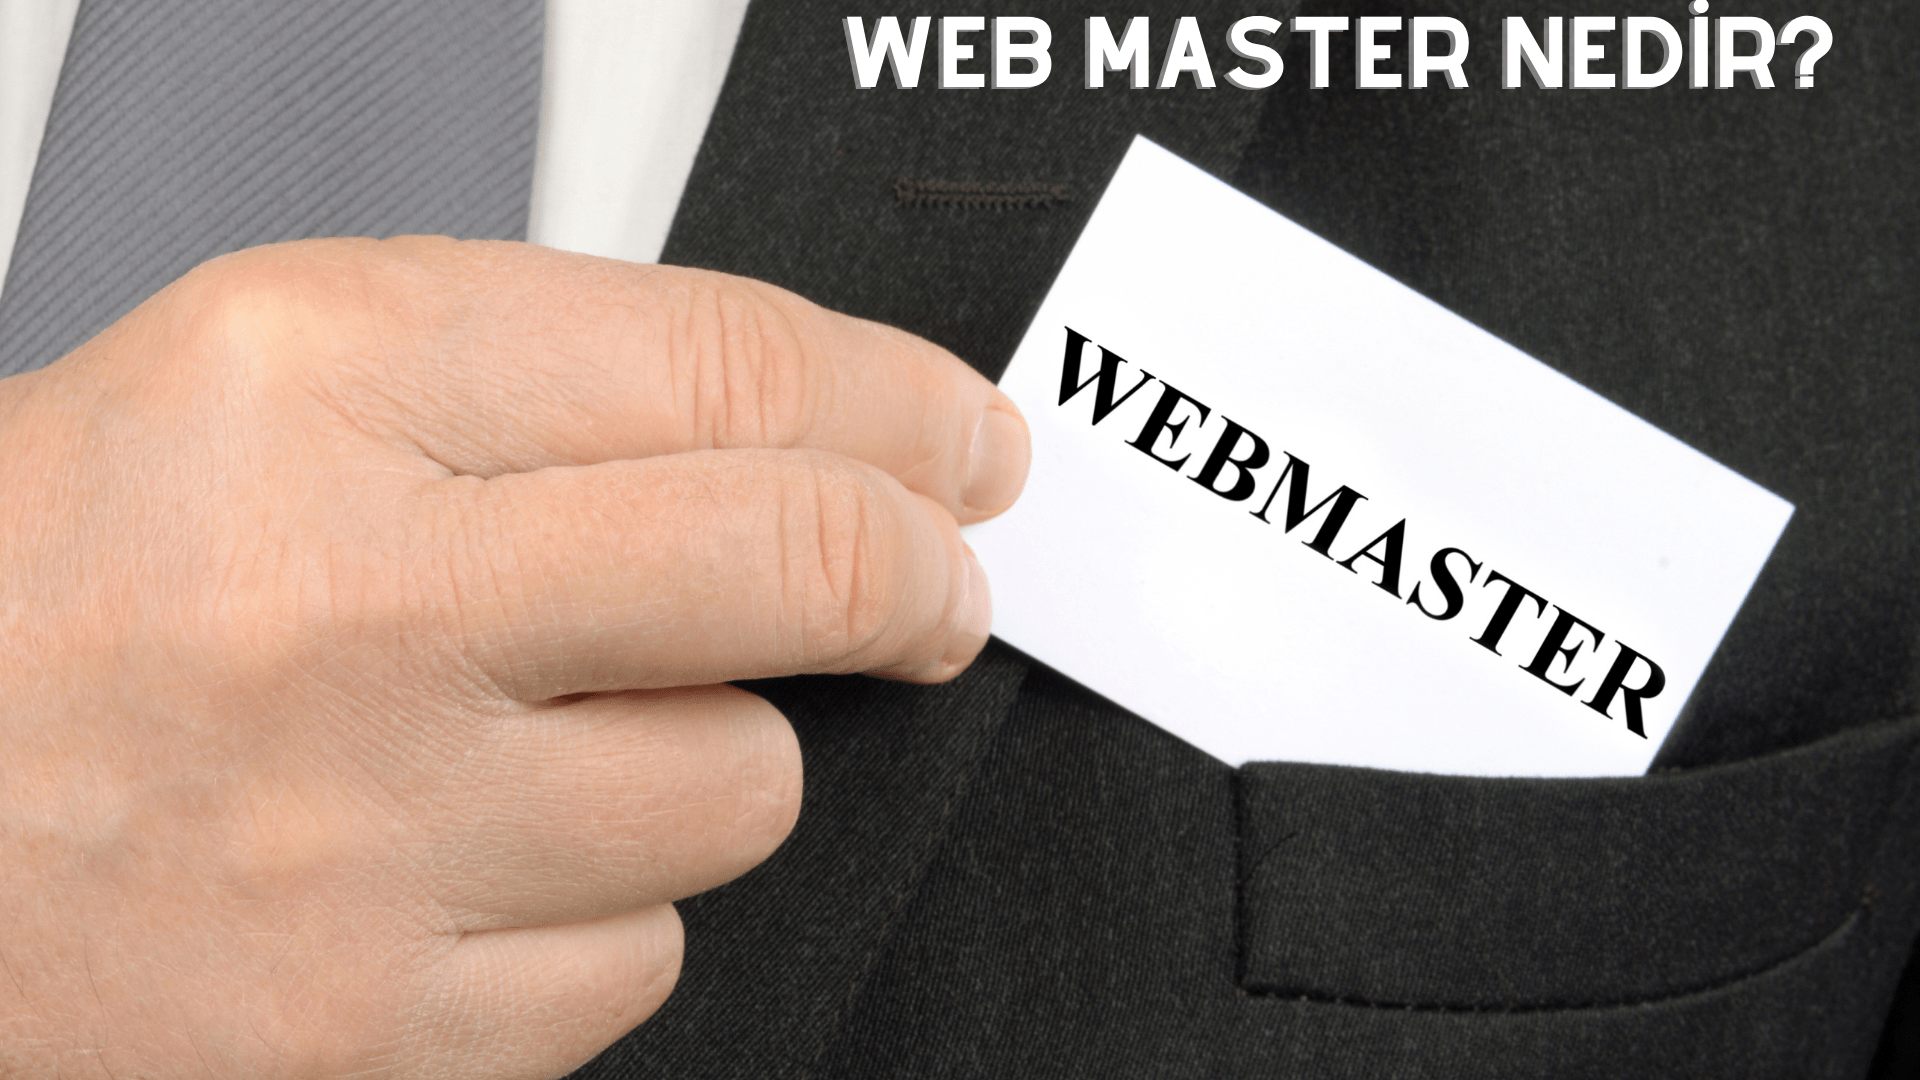 Web Master Nedir seografik.net